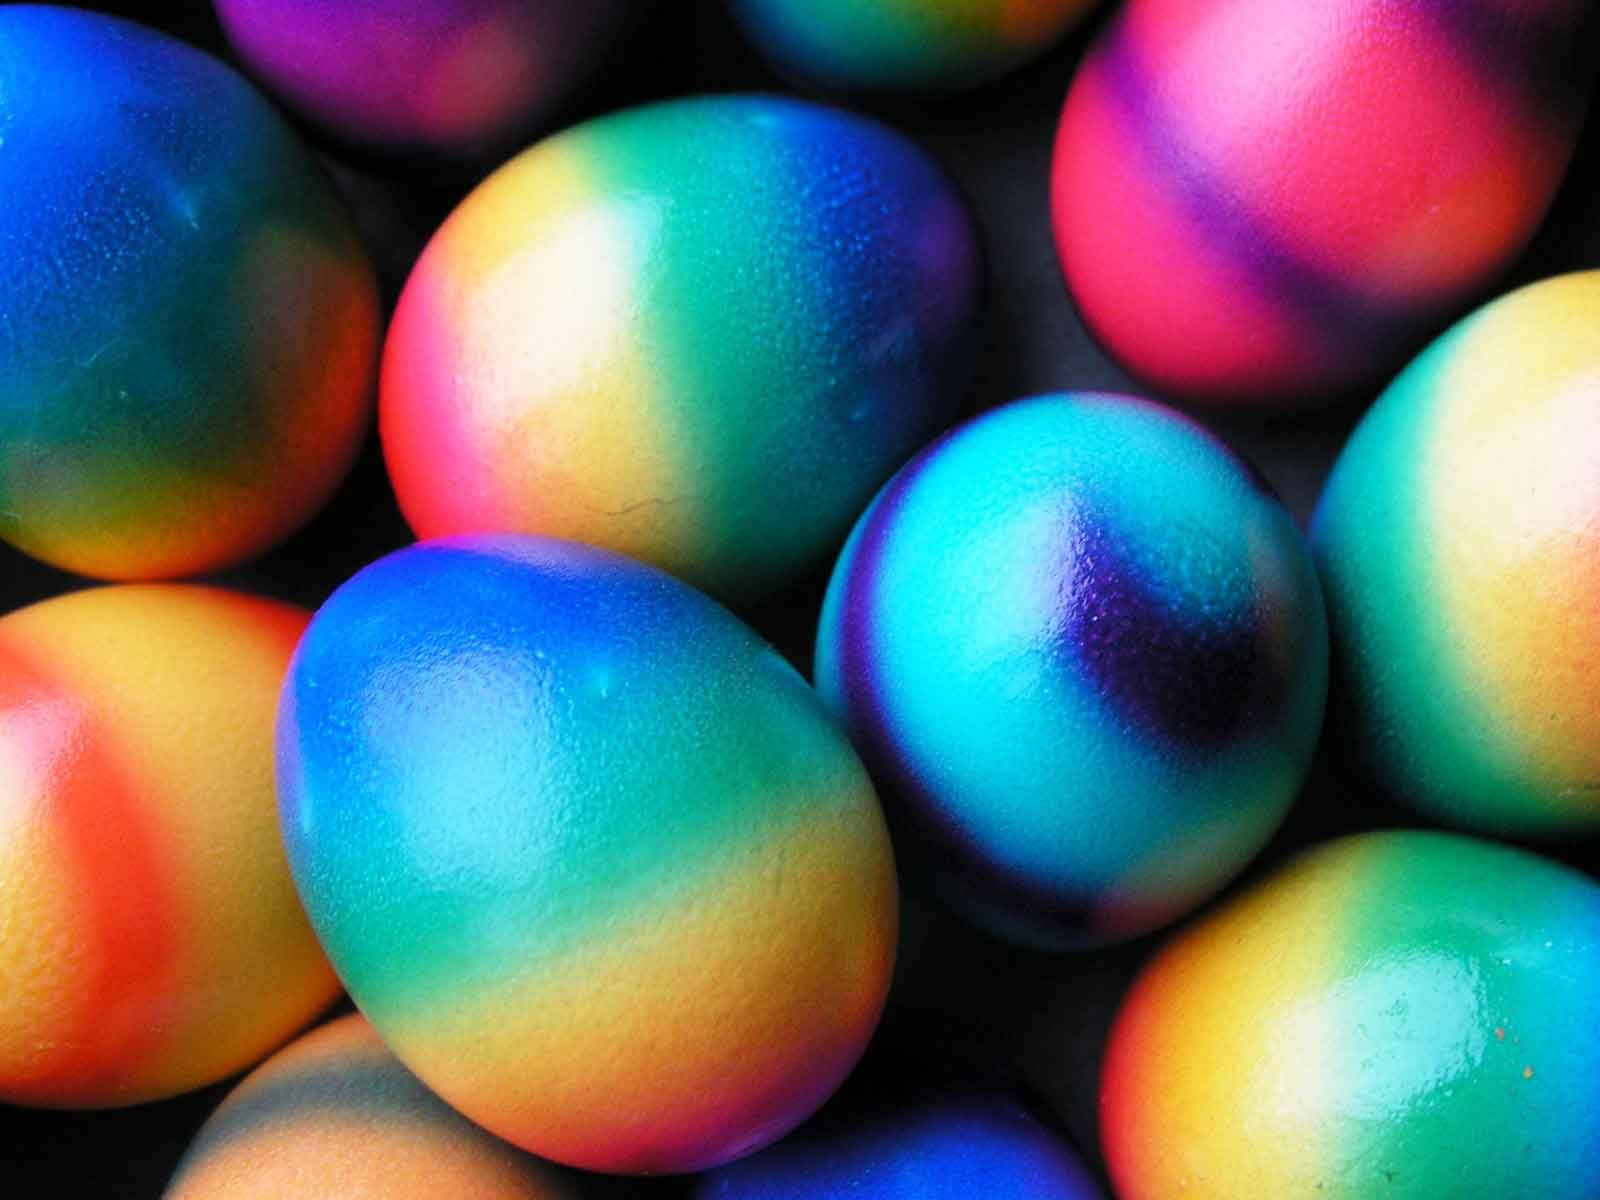 Pastel Easter Egg Wallpapers - Top Free Pastel Easter Egg Backgrounds